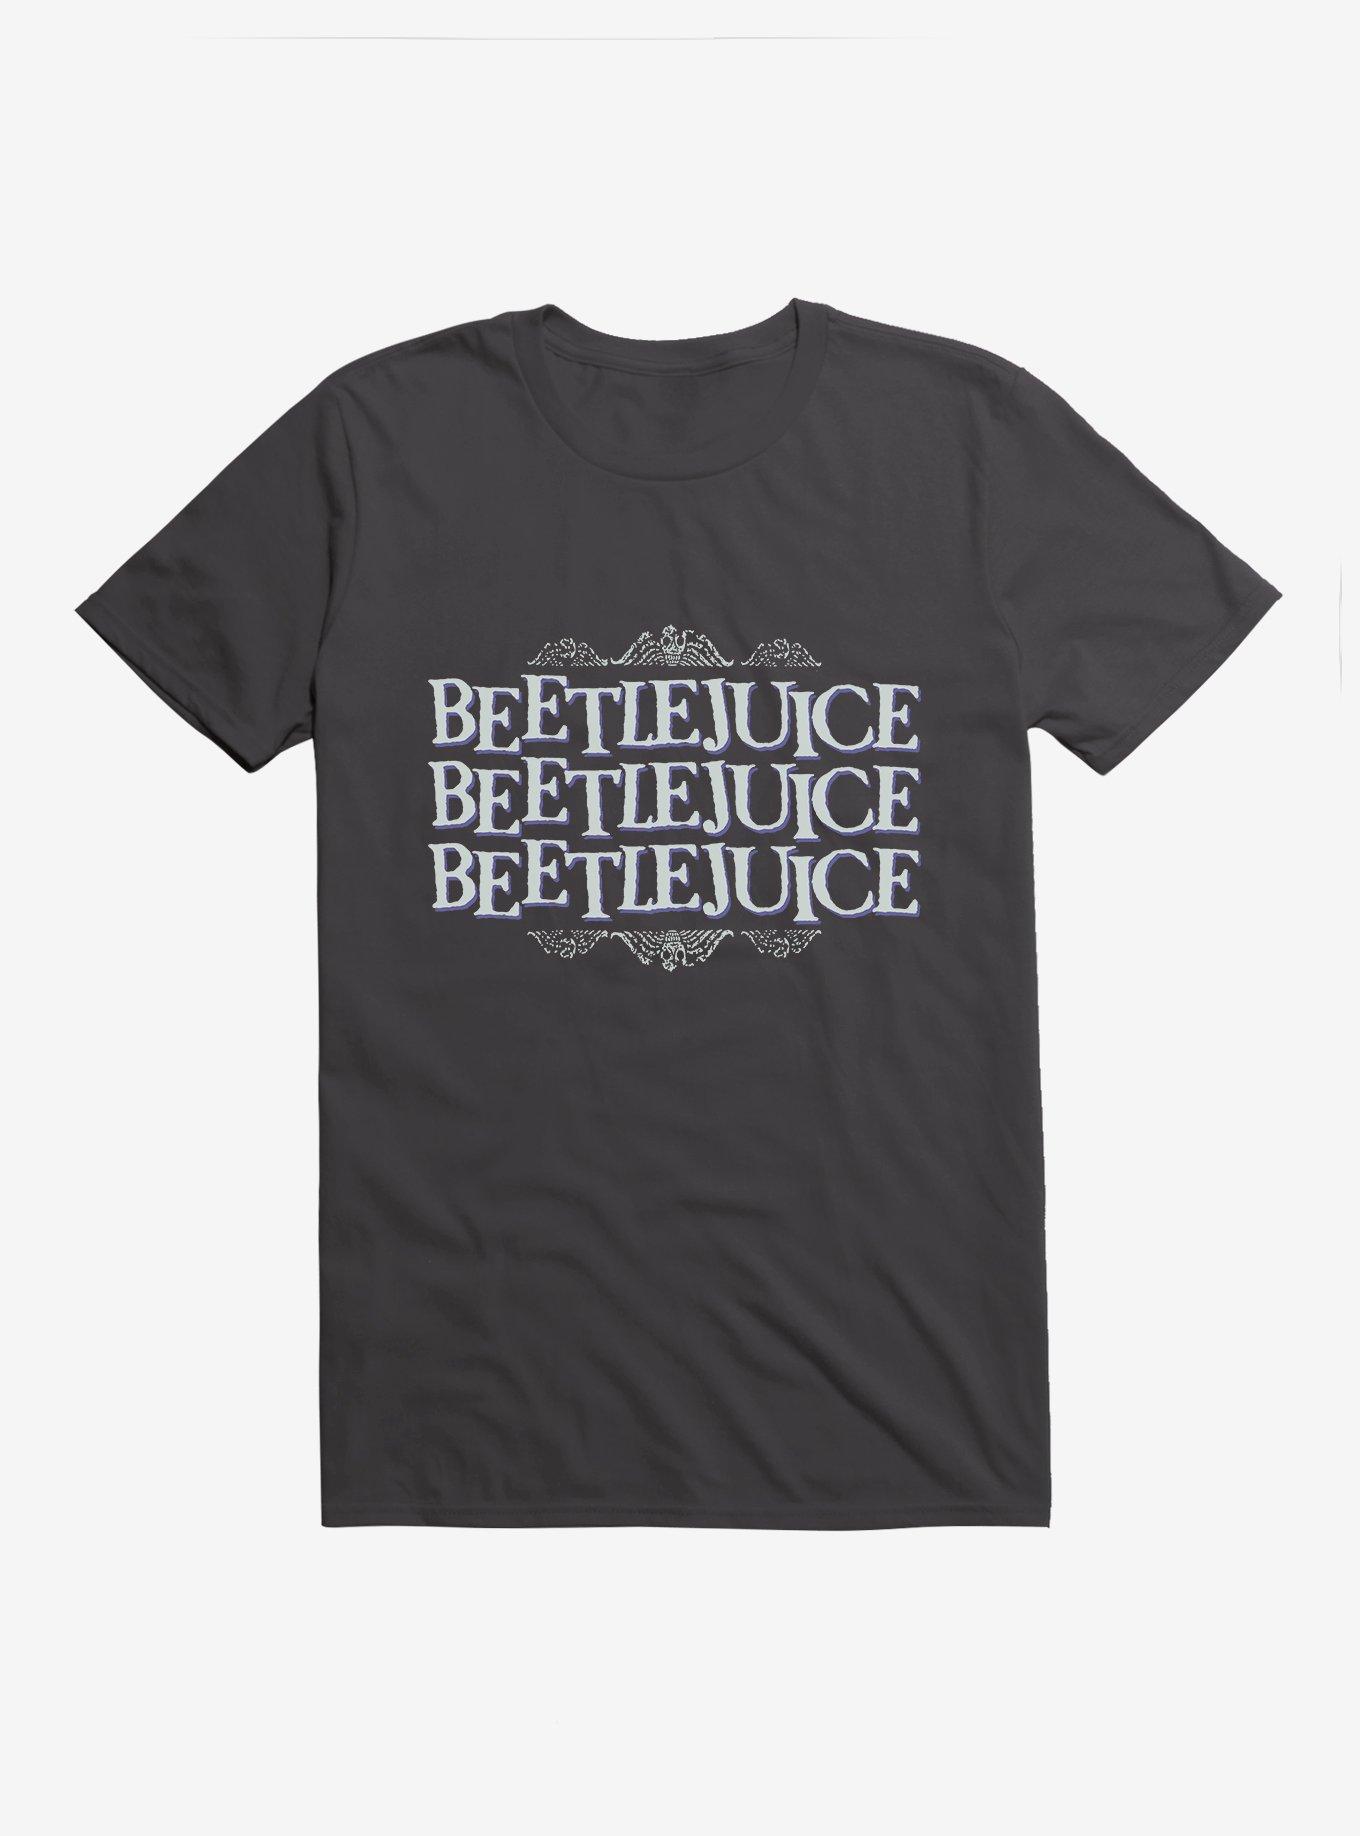 Beetlejuice Say It 3 Times! T-Shirt, , hi-res